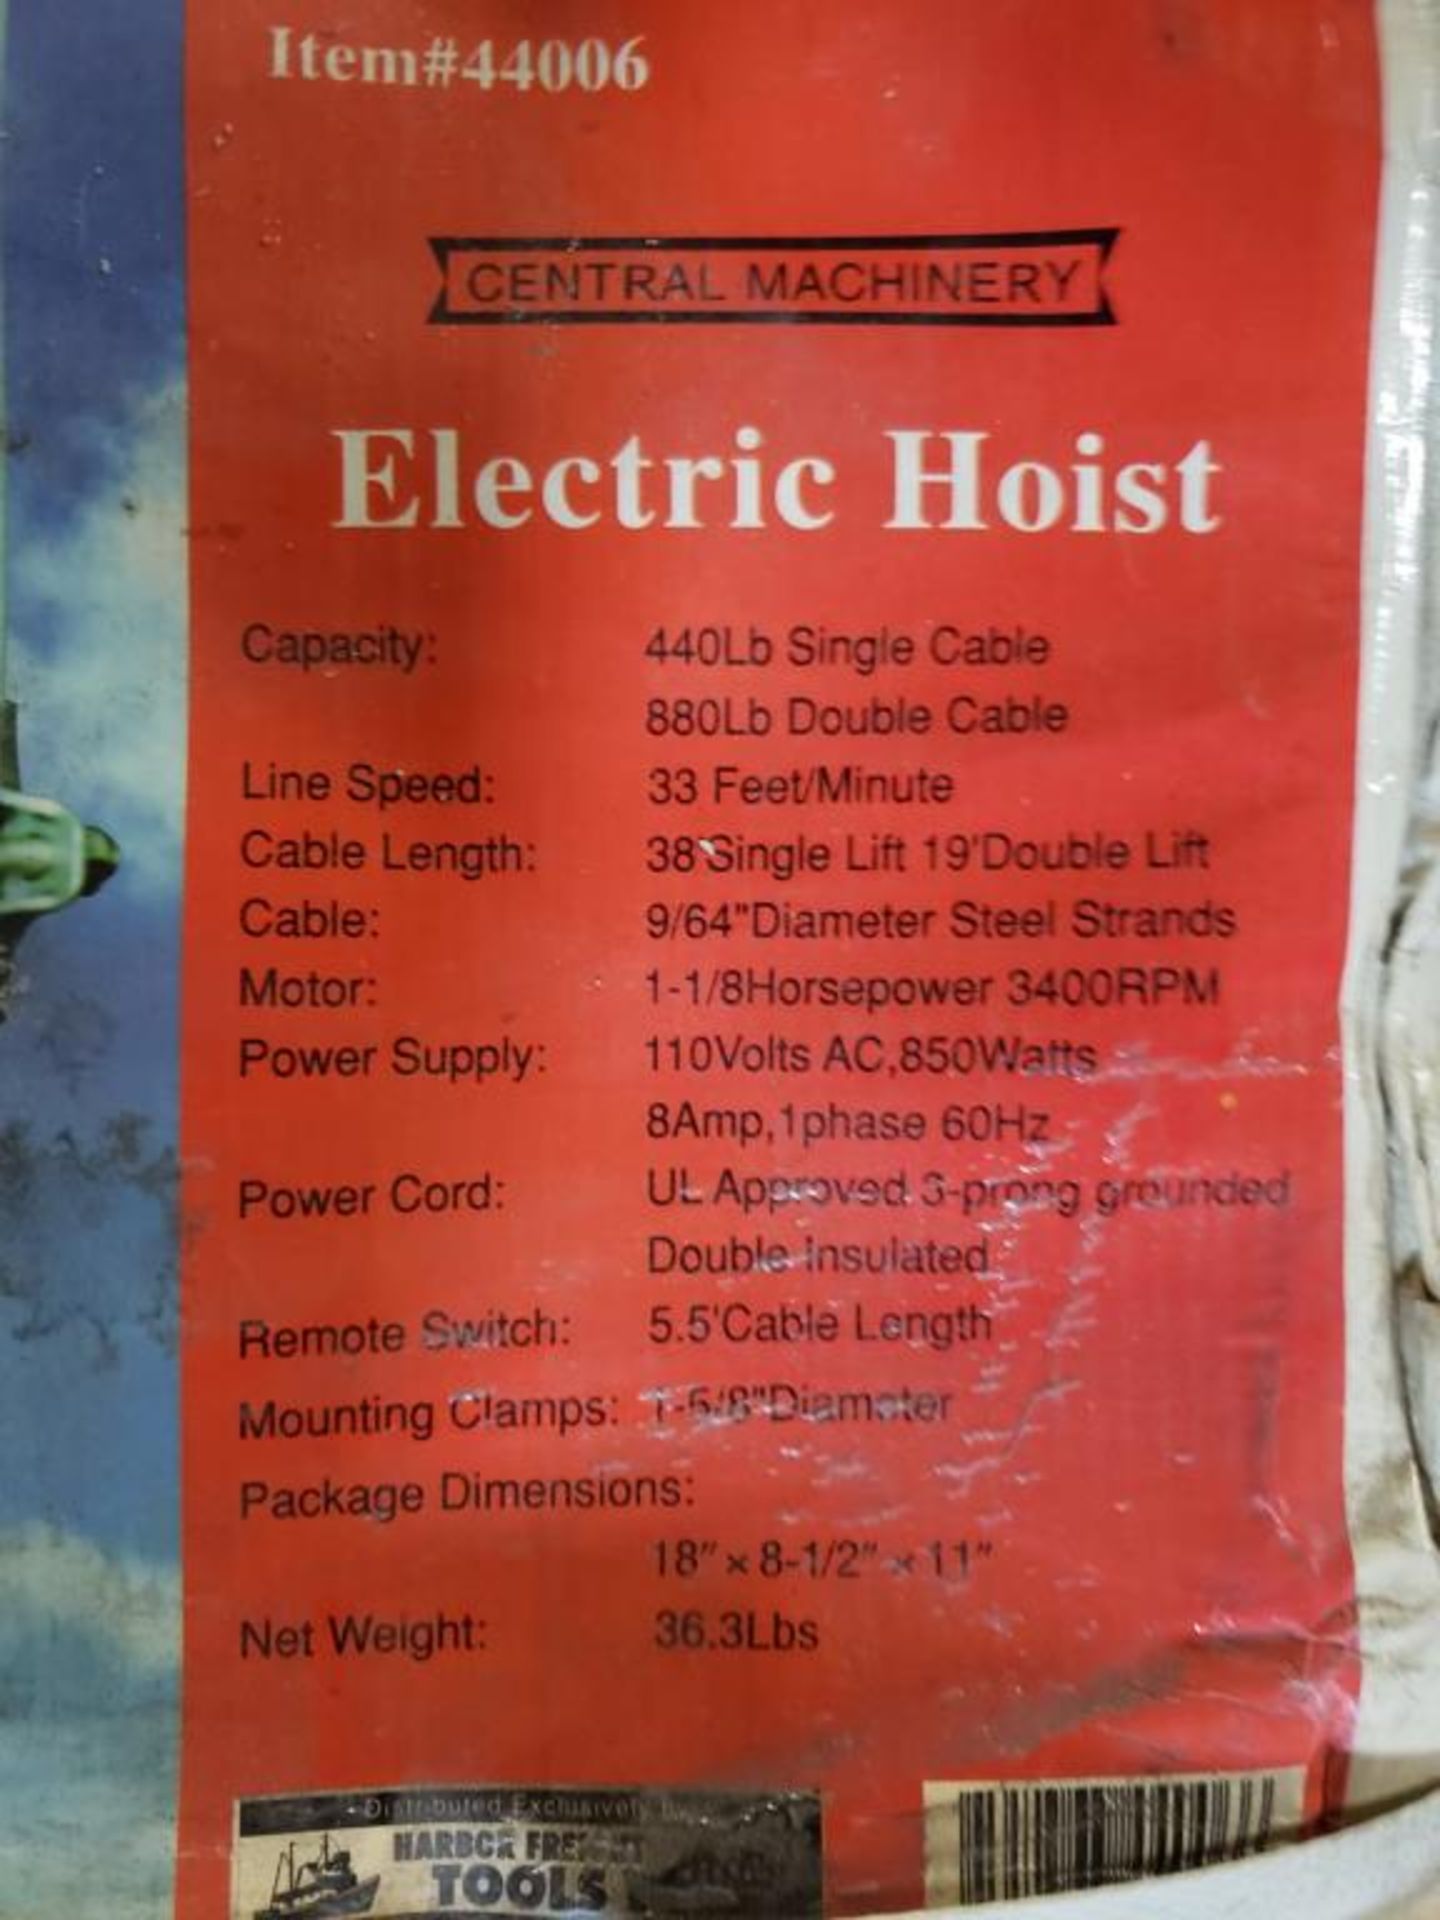 Electric Hoist - Image 2 of 2